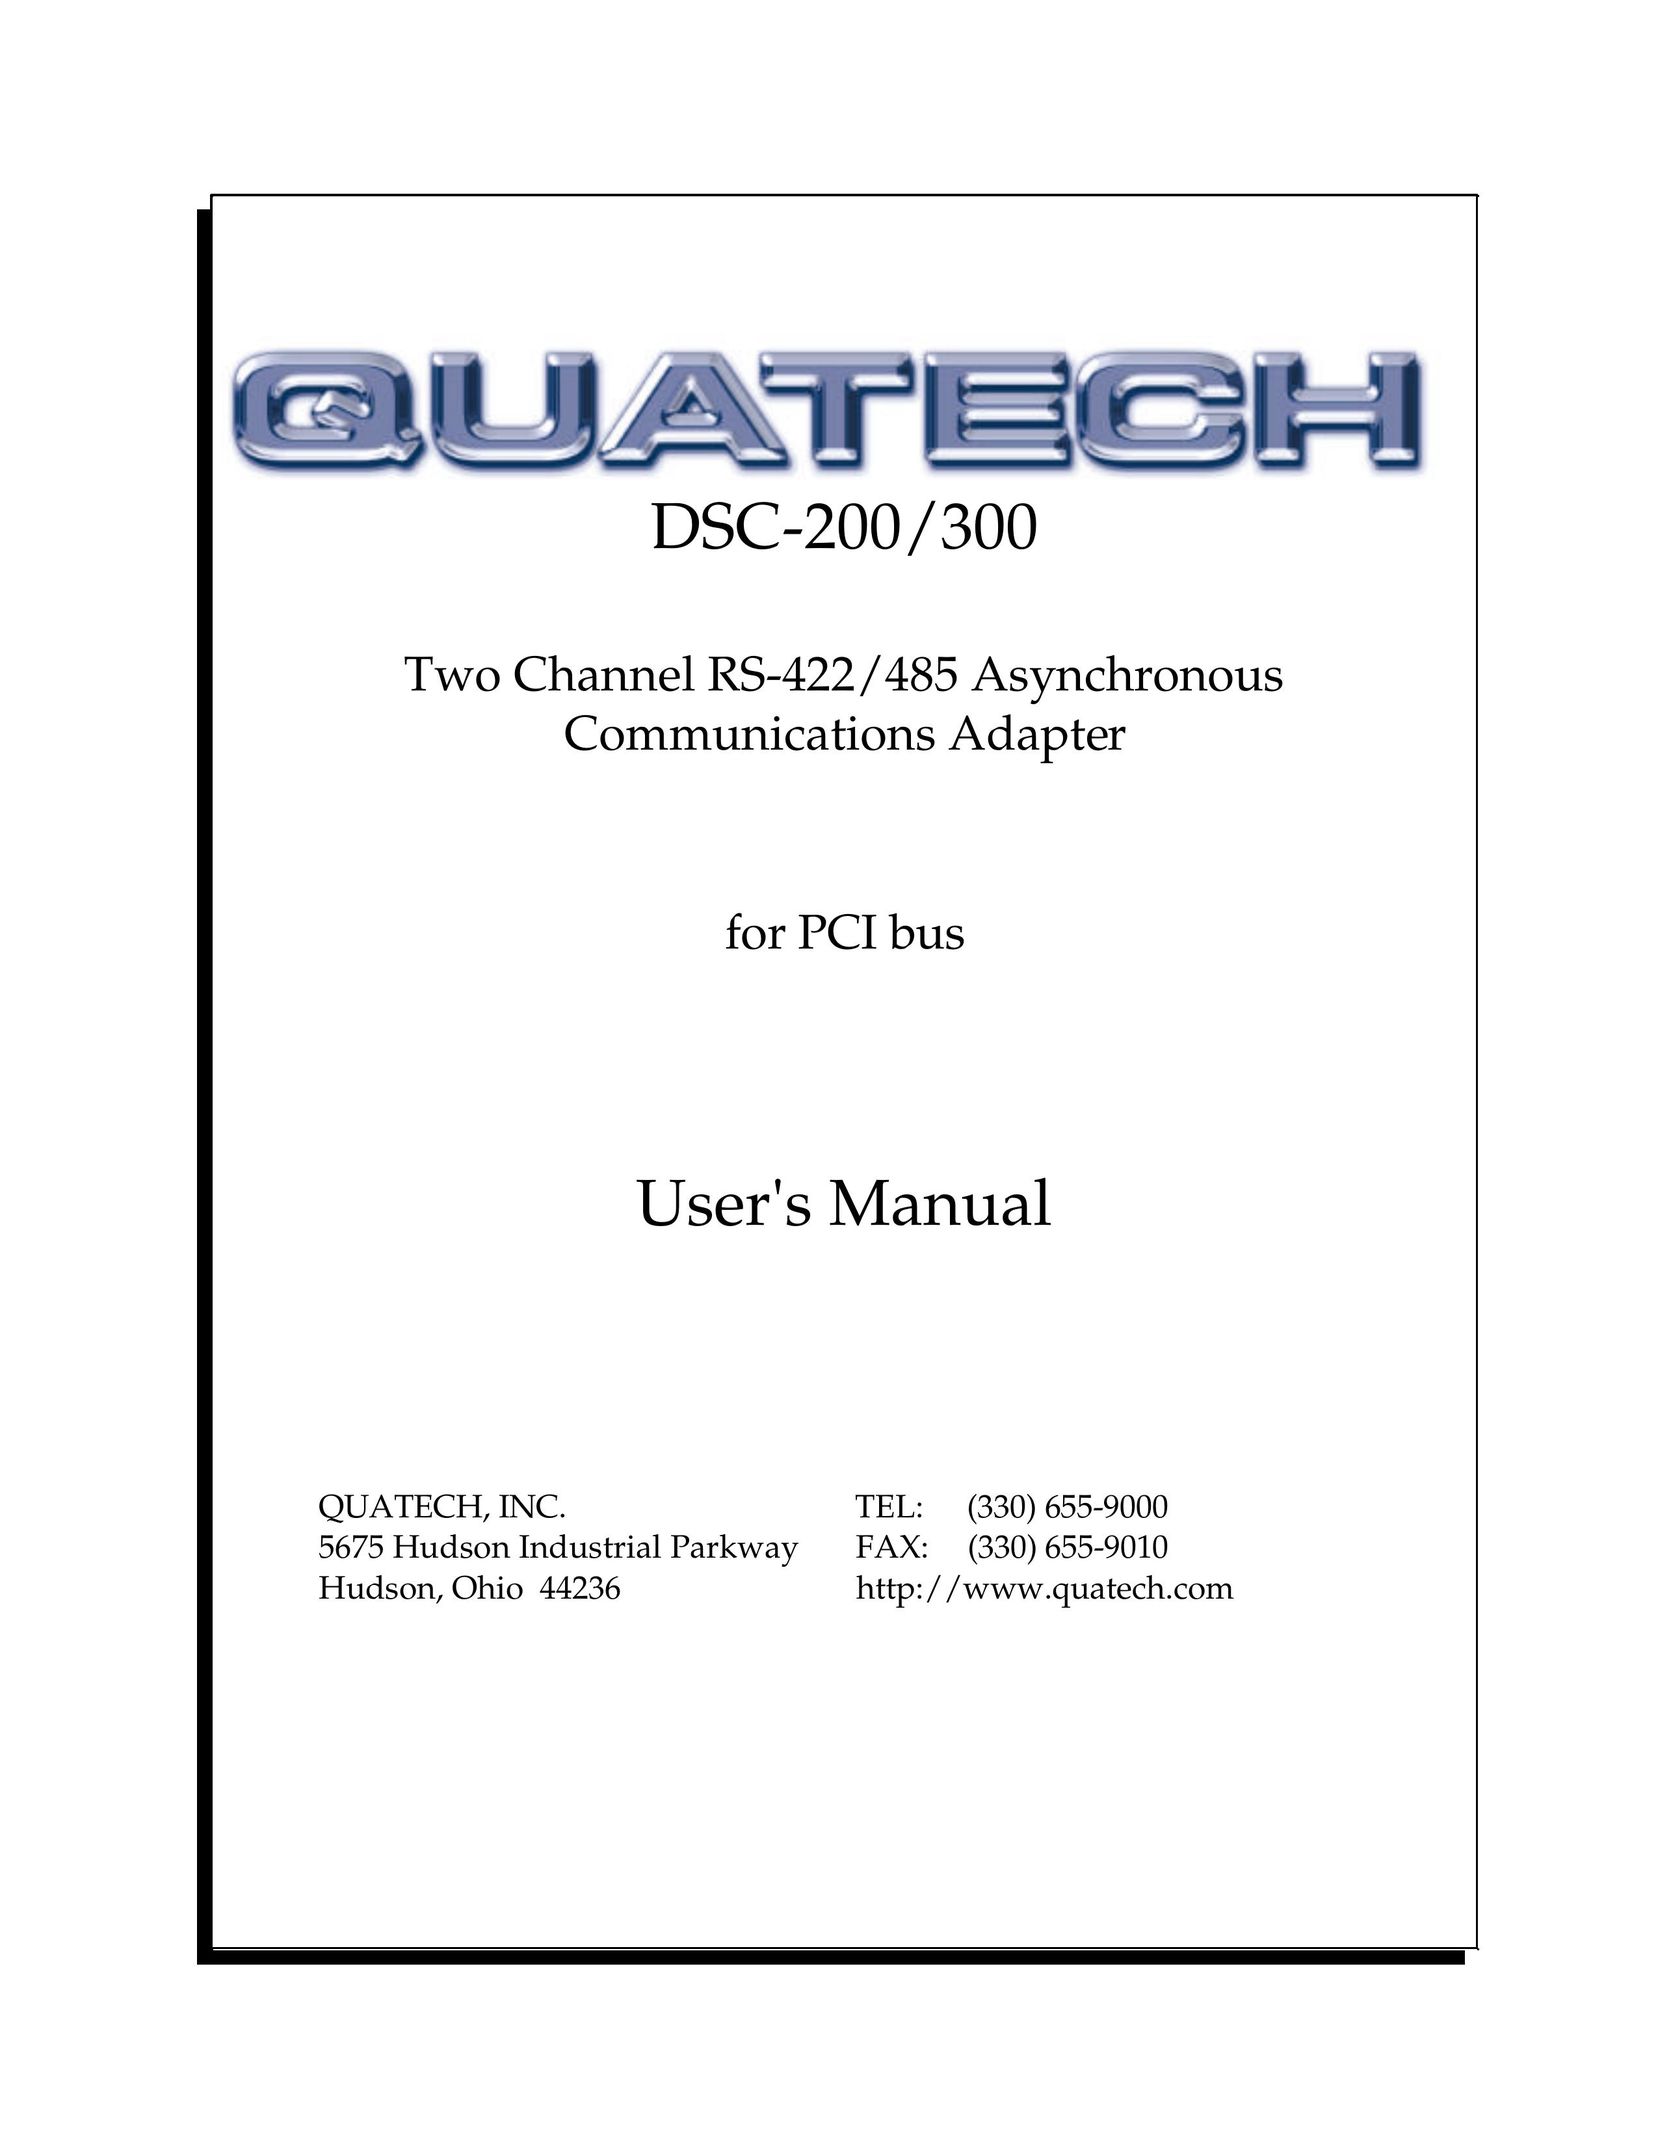 Quatech DSC-200/300 Network Card User Manual